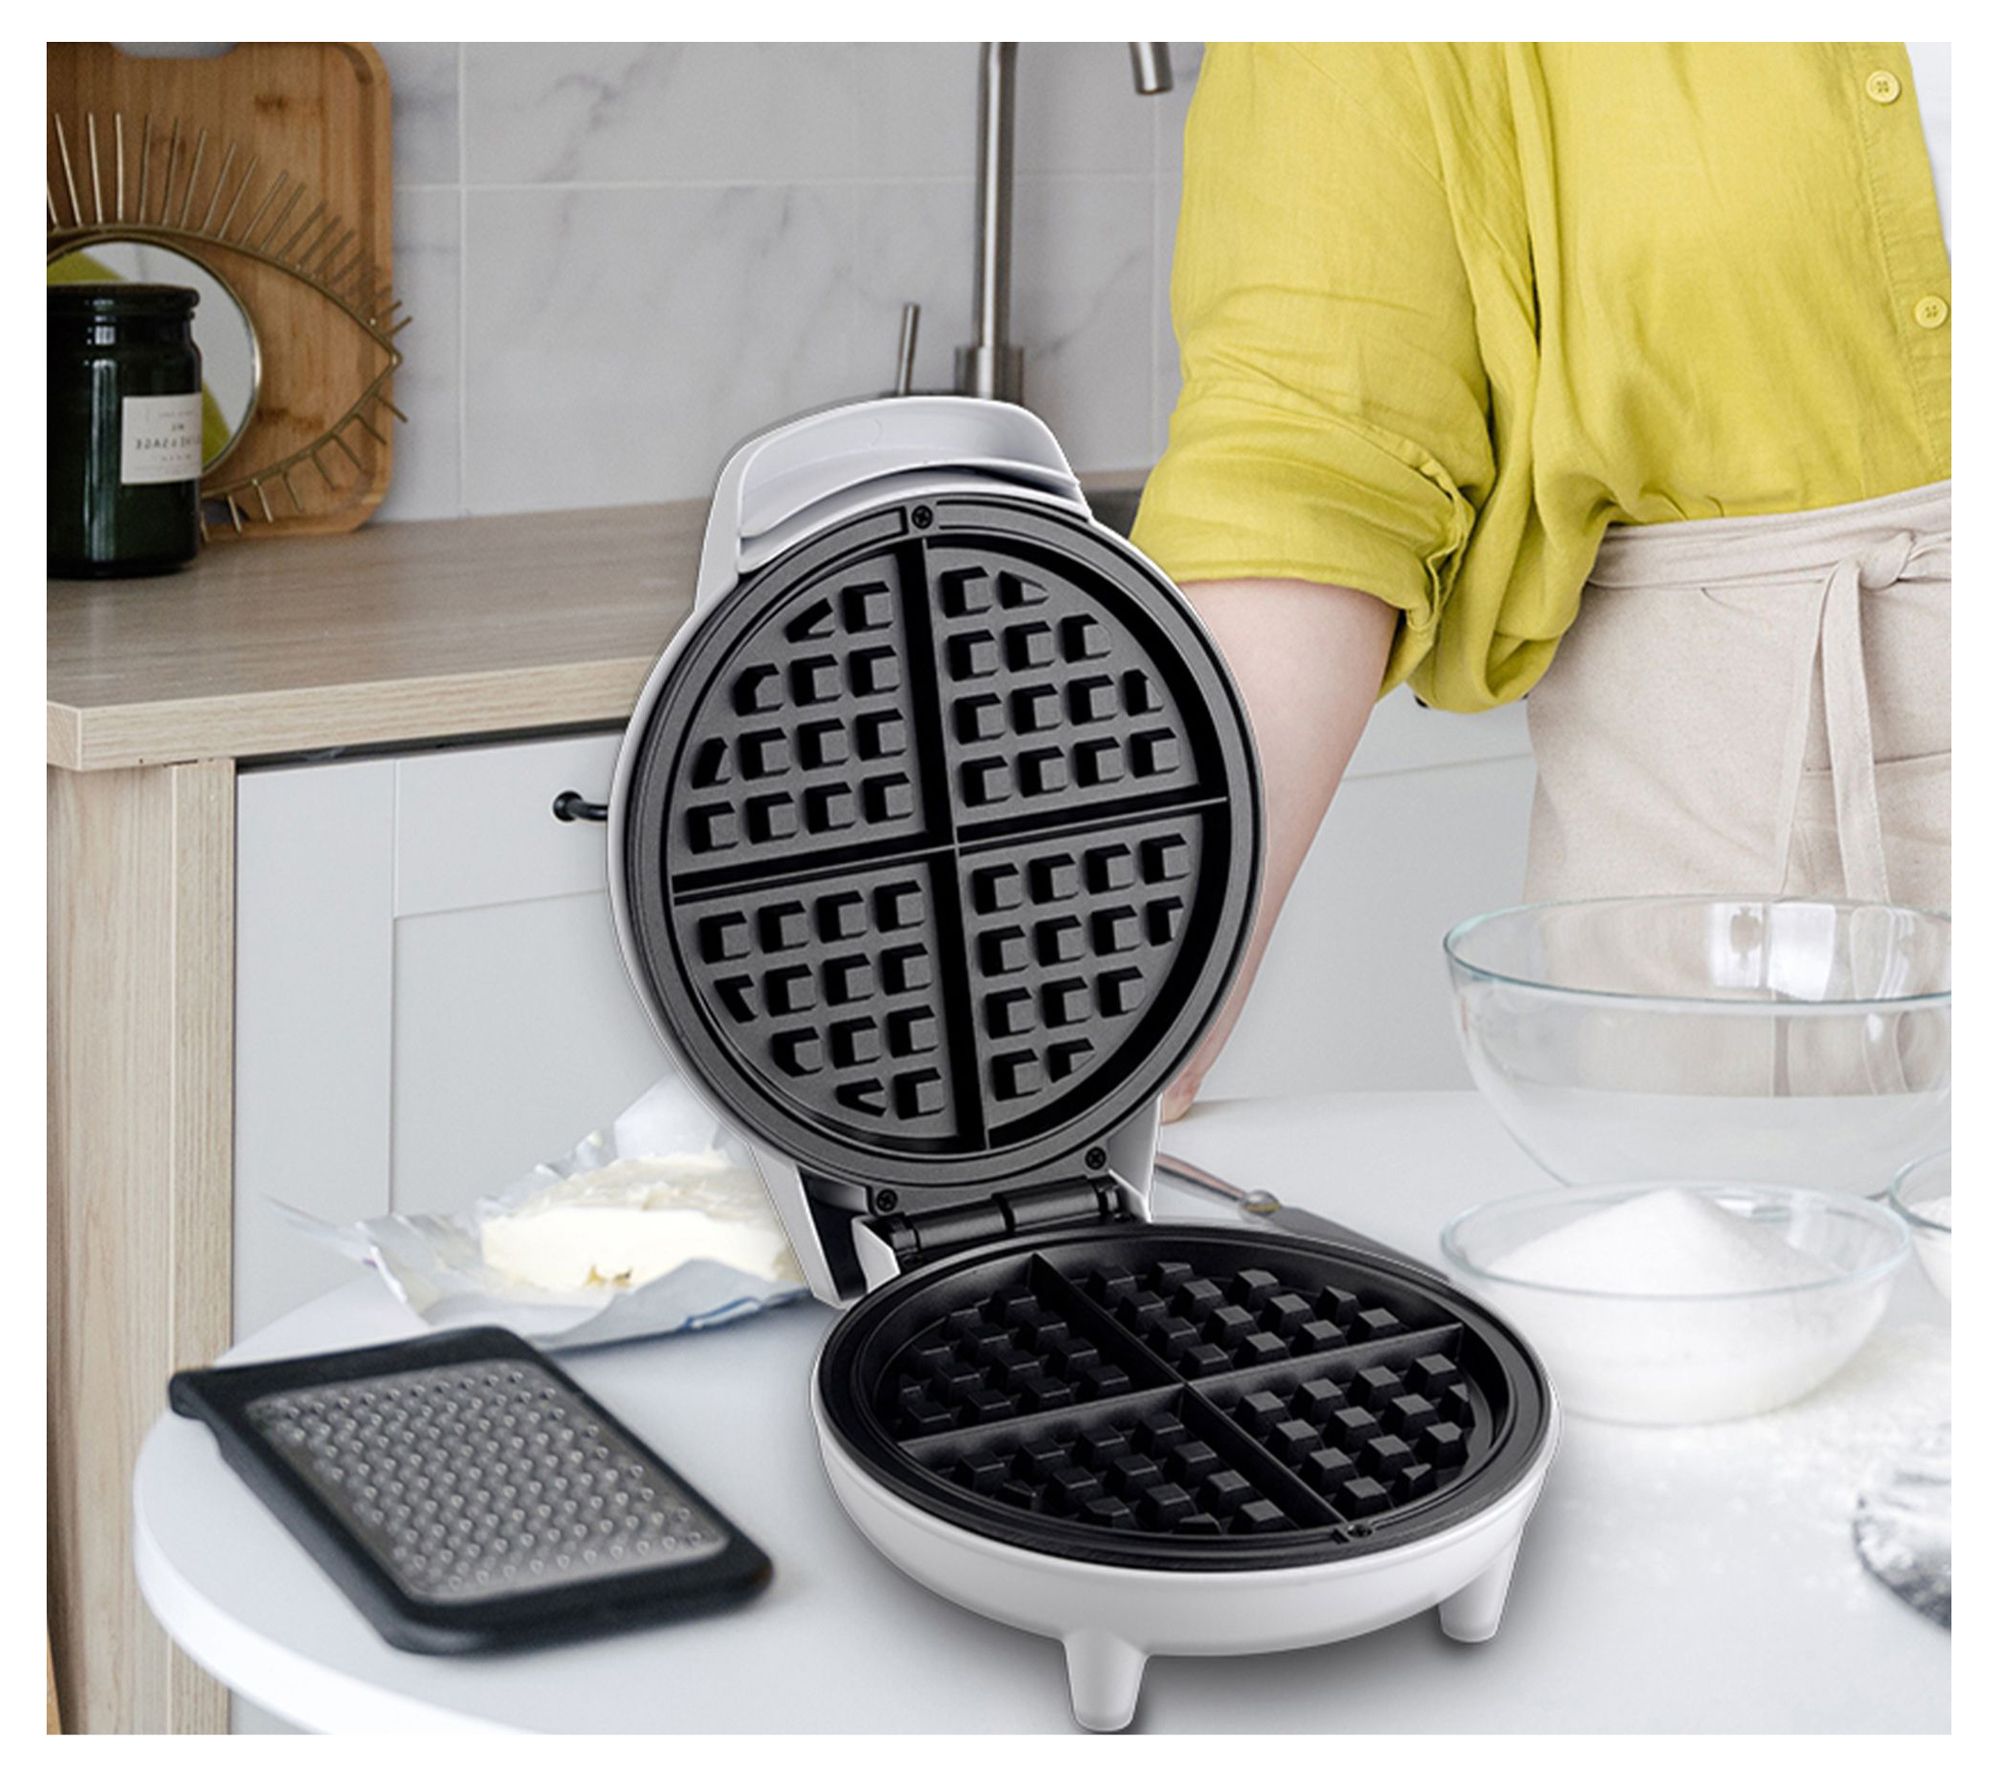 Elite Ceramic Nonstick 2-Square Waffle Maker